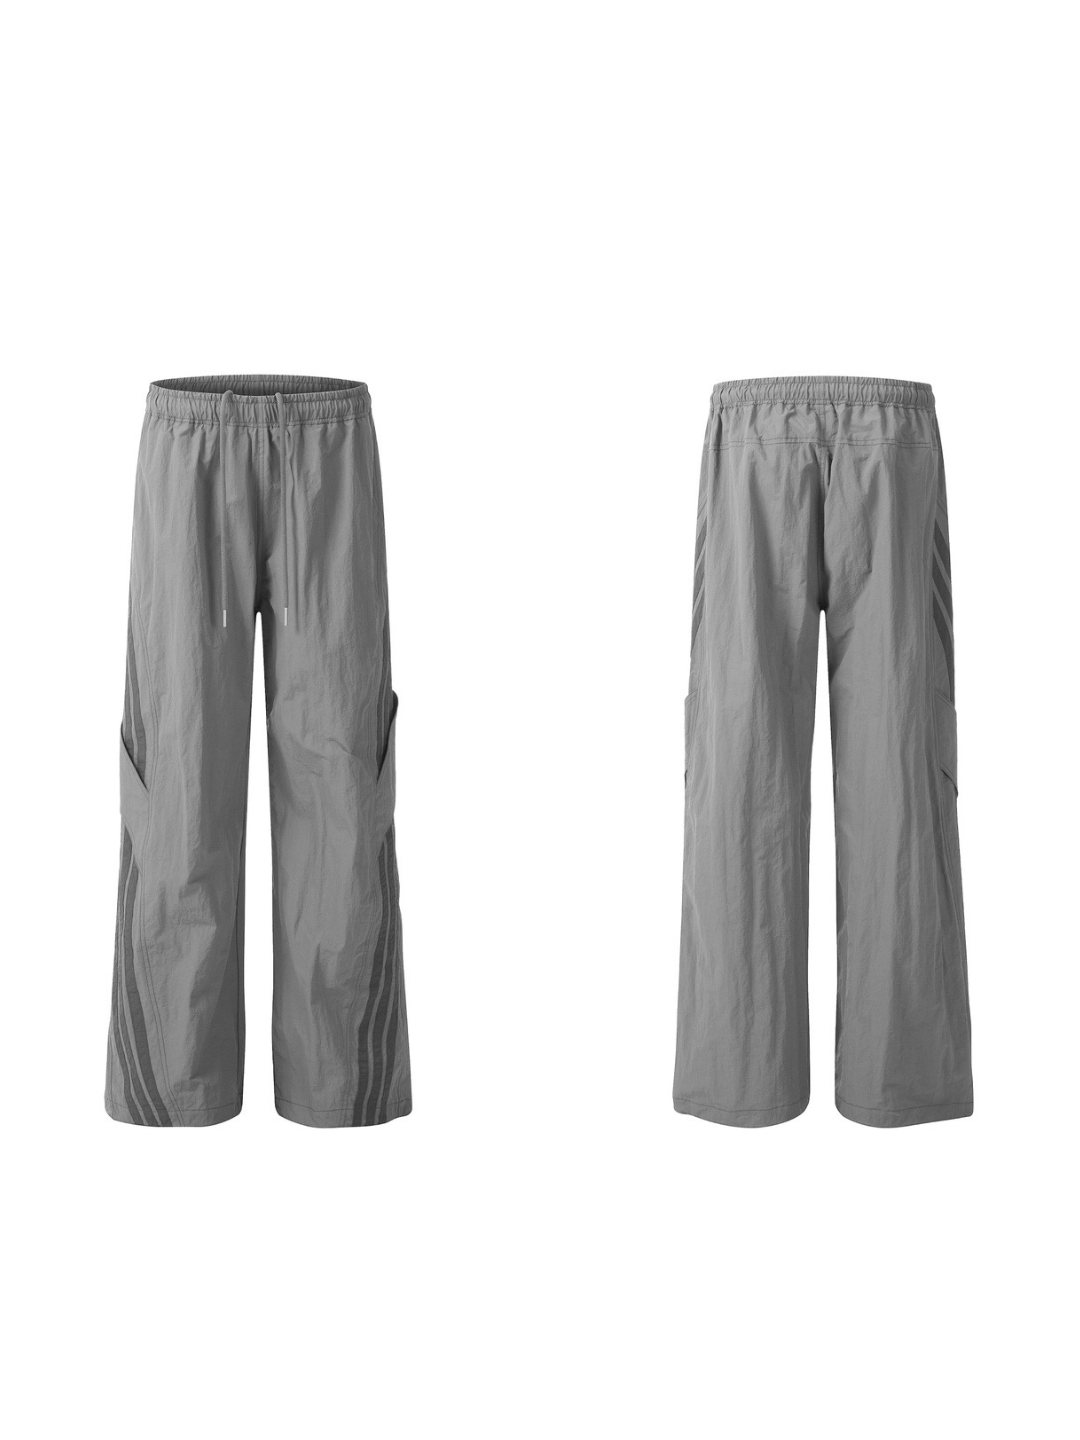 【Mz】 loose wide leg sports workwear pants  na1263